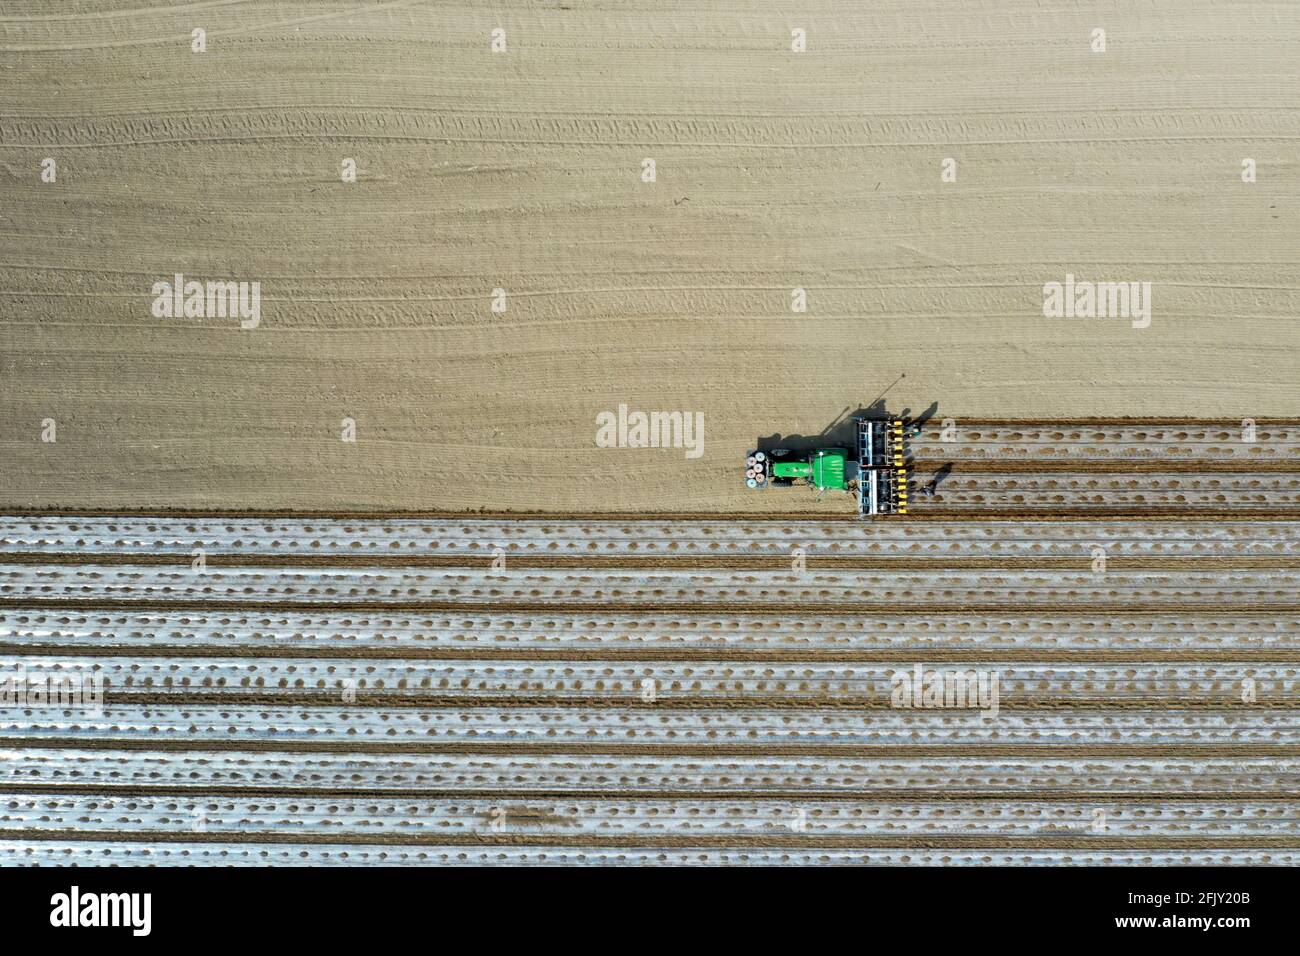 Shuanghe, China. April 2021. Die 770,000 Hektar großen Baumwollfelder vervollständigen die Aussaat in Shuanghe, Xinjiang, China, am 26. April 2021.(Foto: TPG/cnsphotos) Quelle: TopPhoto/Alamy Live News Stockfoto